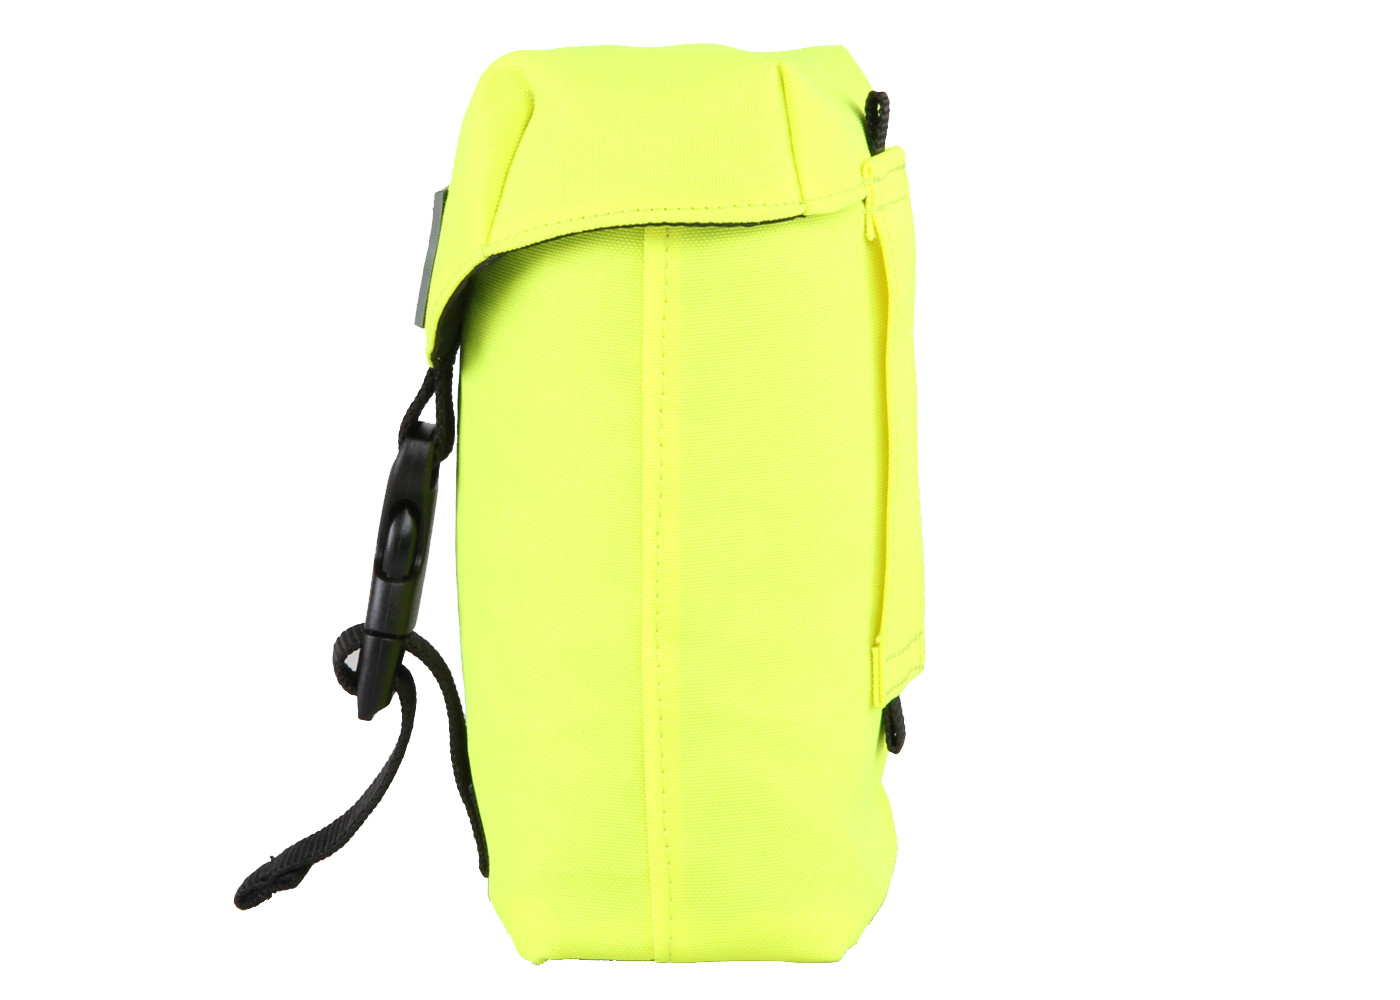 Waterproof EVA foam, Neoprene Pouches Mini Colourful Waist Pouch Bags